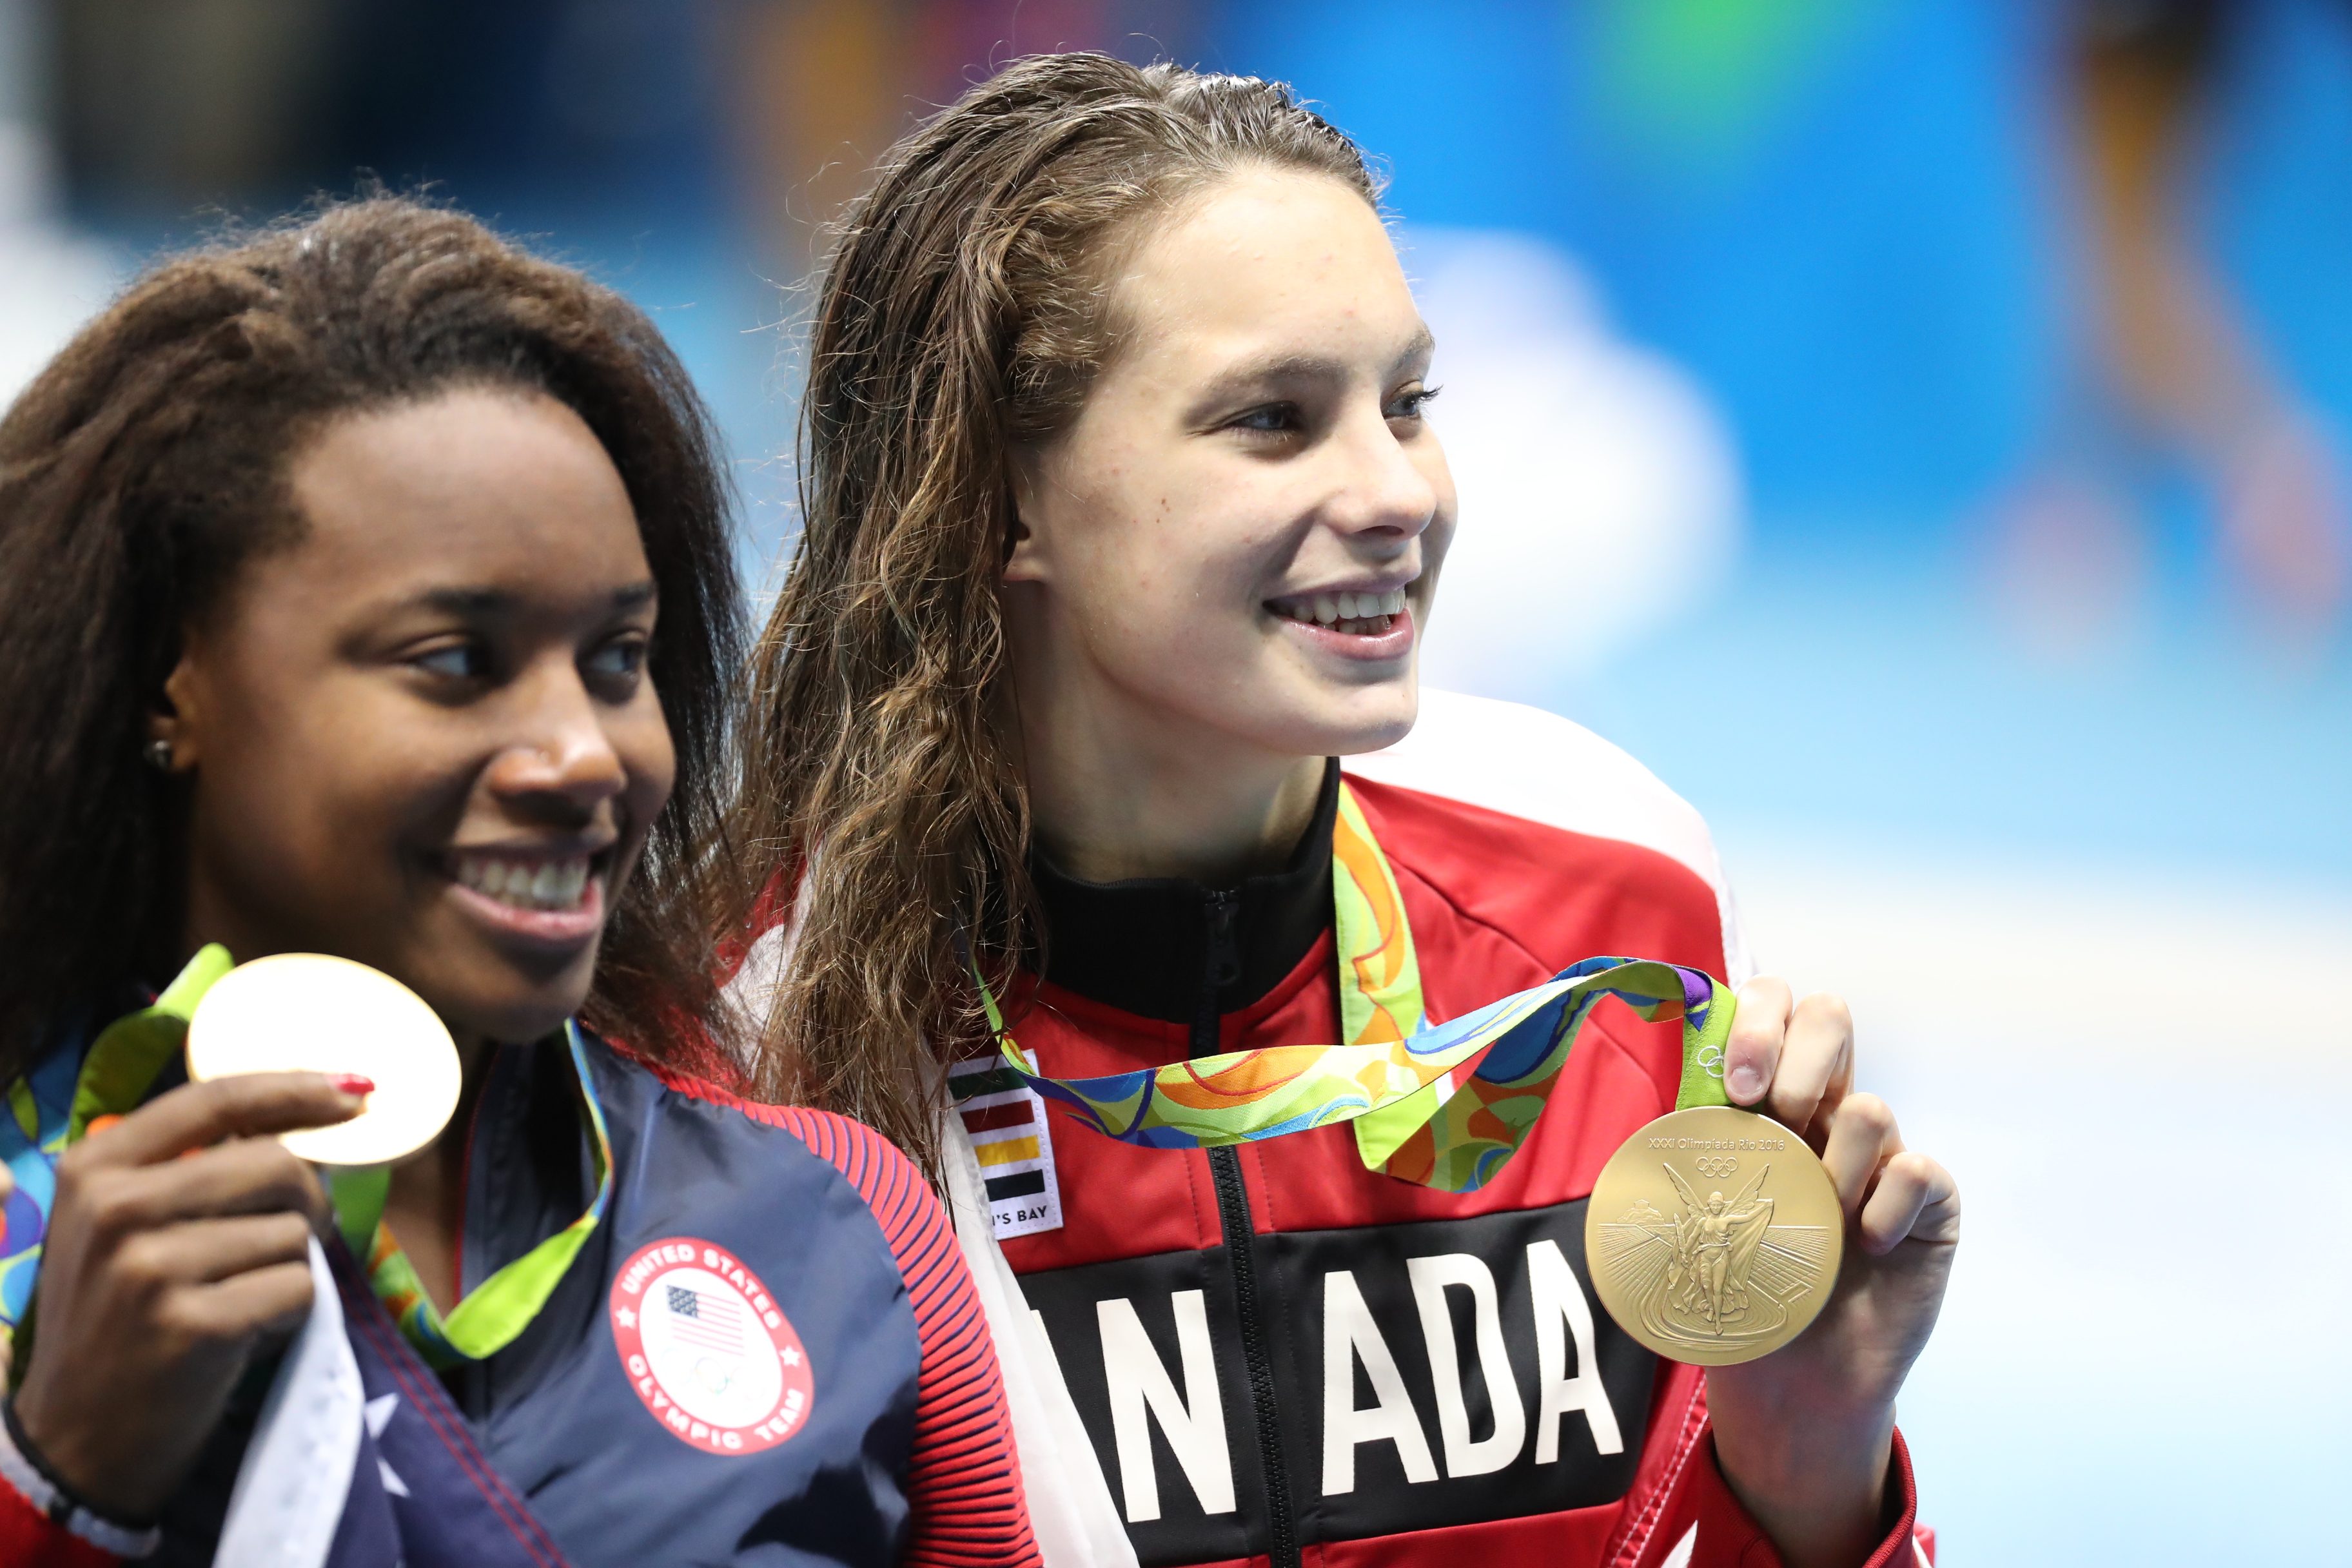 Atlet asal Amerika Serikat, Simone Manuel (kiri), dan atlet Kanada, Penny Oleksiak (kanan), keduanya meraih medali emas untuk kategori 100 m gaya bebas perempuan di Olimpiade Rio, pada 11 Agustus 2016. Foto oleh Esteban Biba/EPA
 